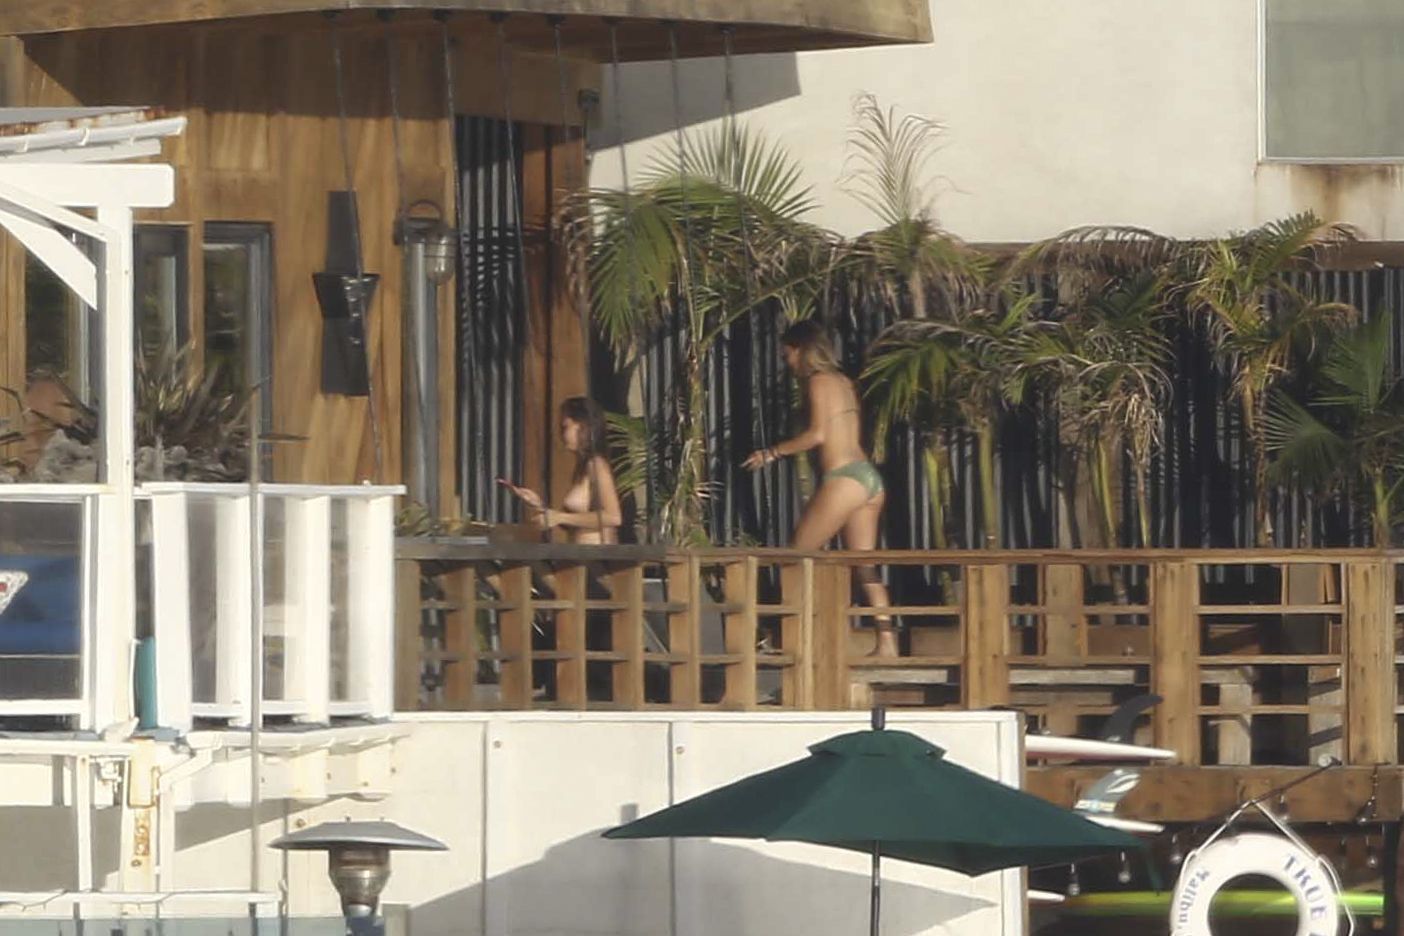 Cara_Delevingne_topless_on_a_balcony_in_Malibu_48x_HQ_8.jpg